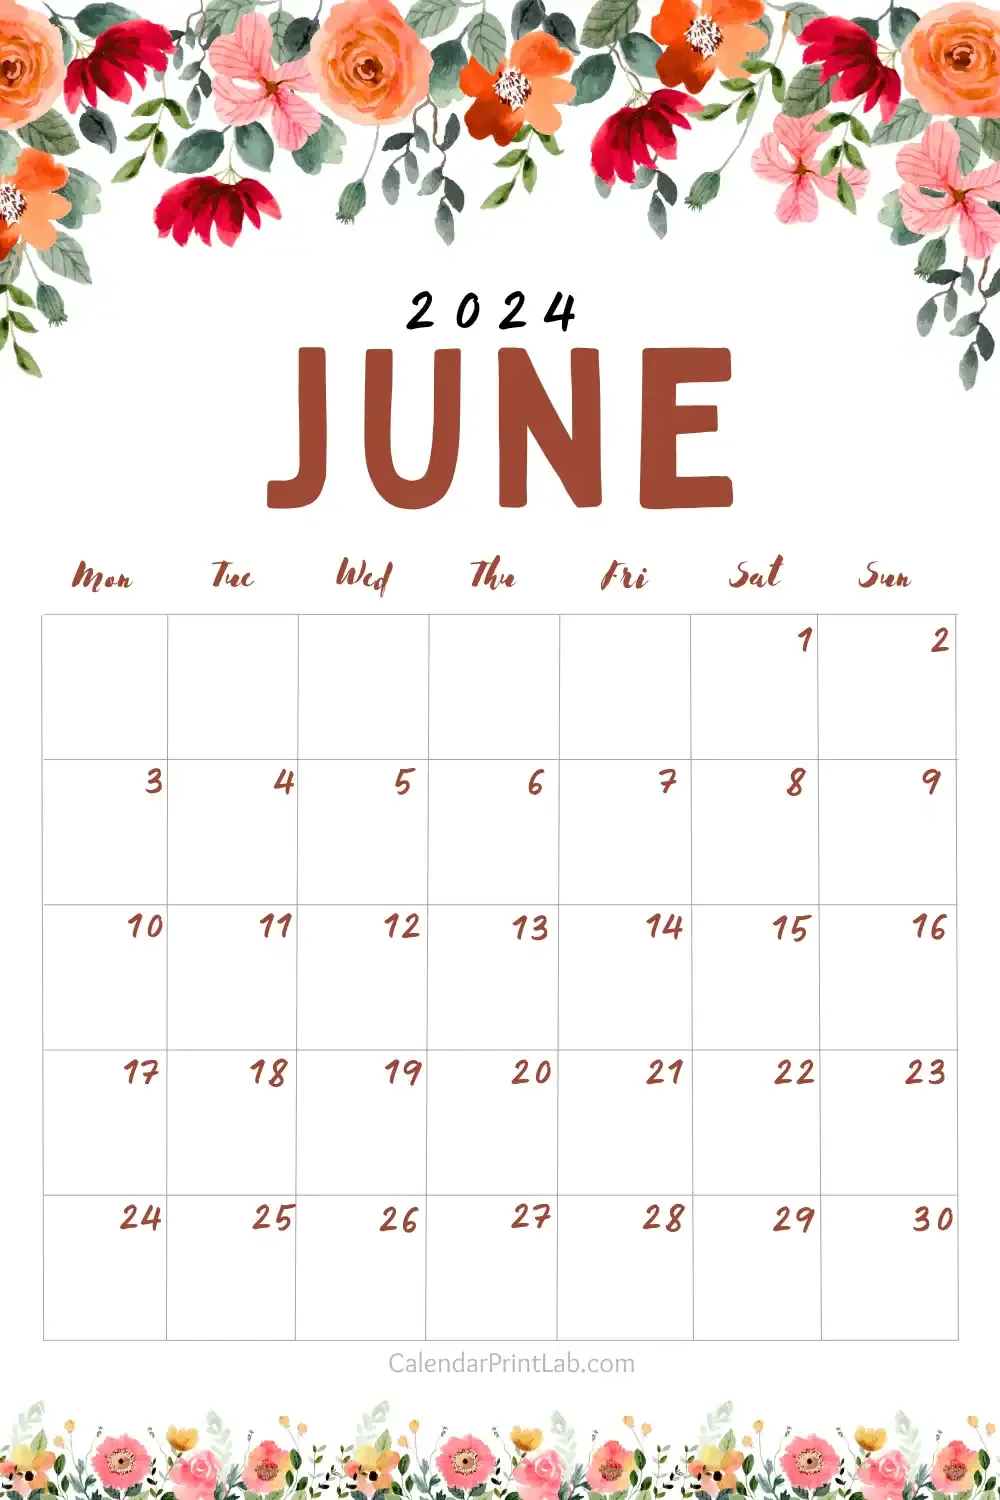 June 2024 Floral Calendar